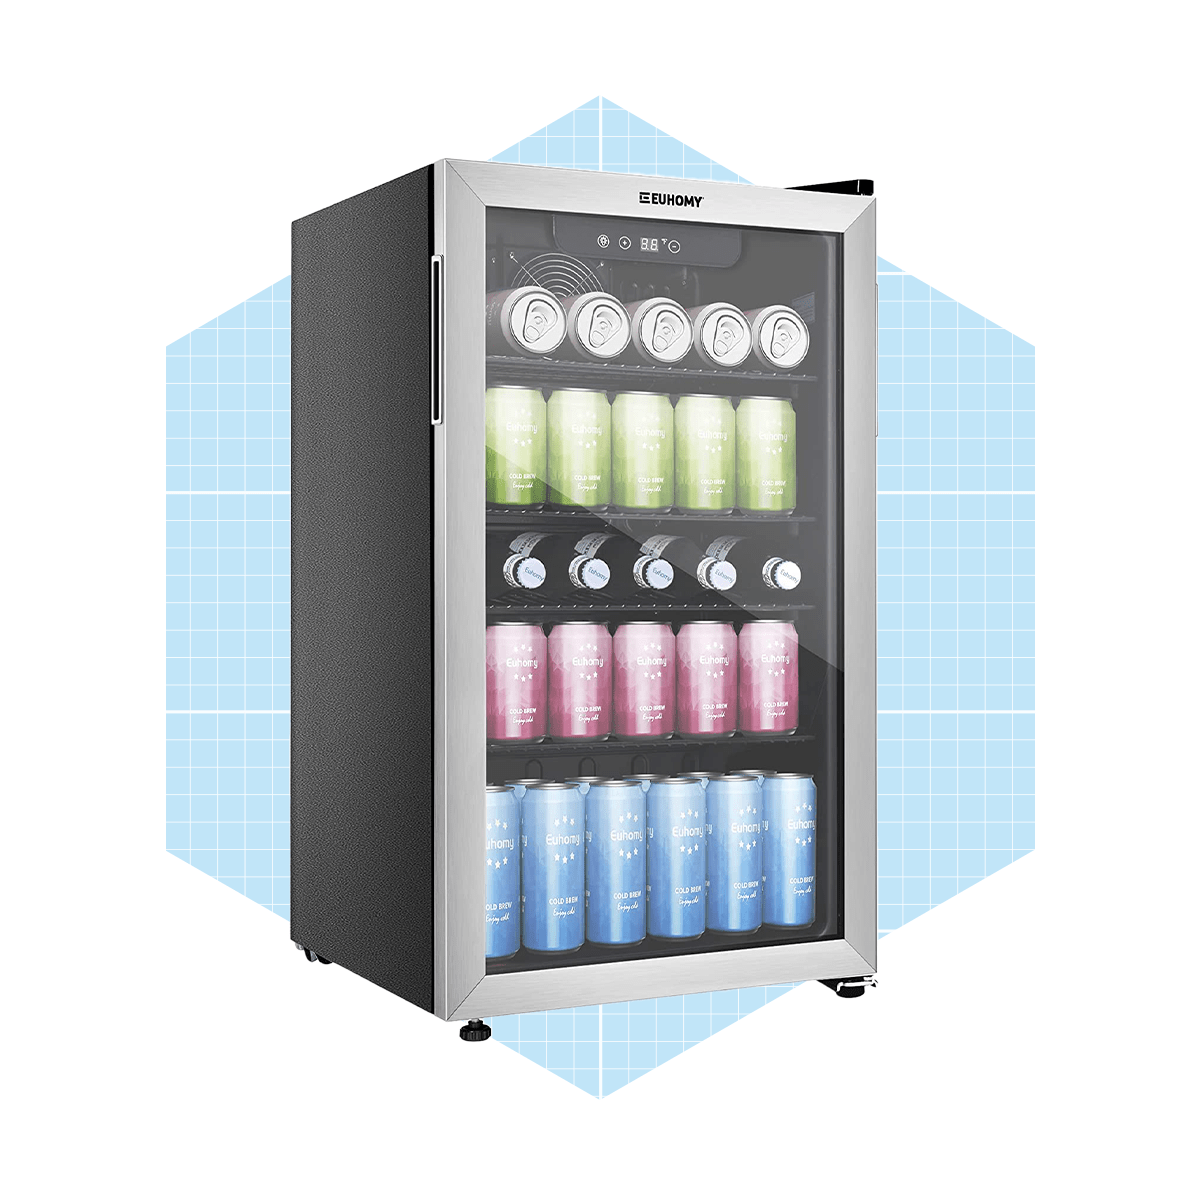 Euhomy Beverage Refrigerator And Cooler Ecomm Via Amazon.com